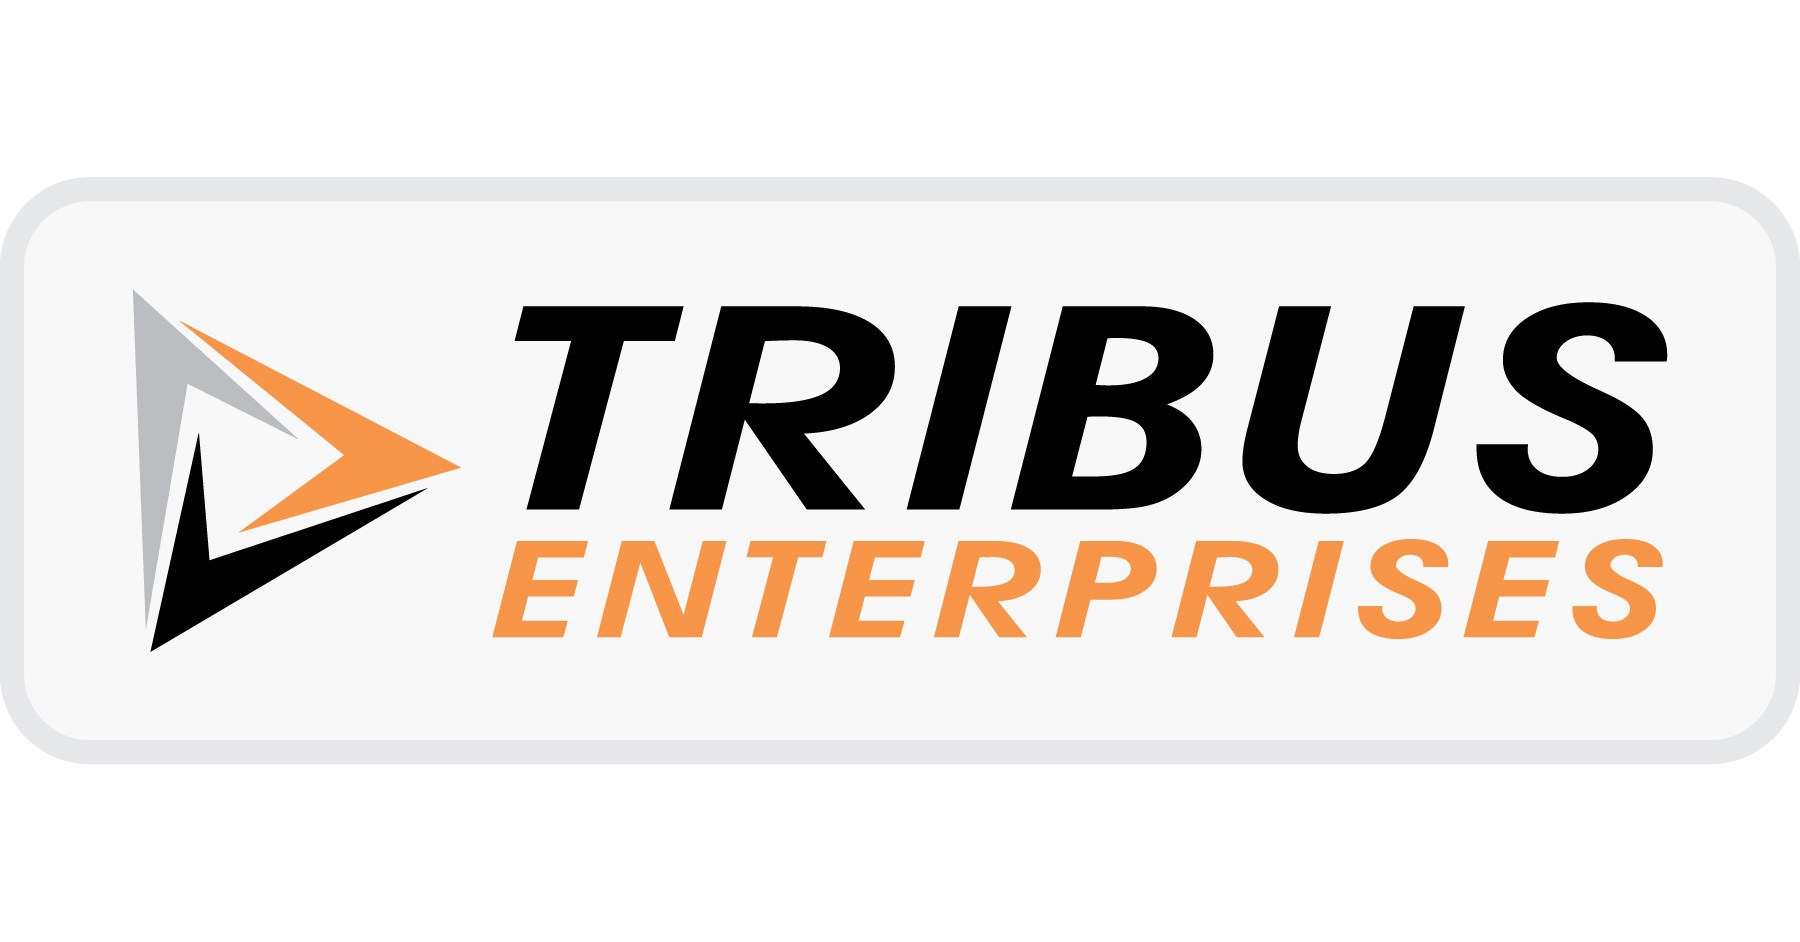 Tribus Enterprises In the Process of Seeking Funding to Start